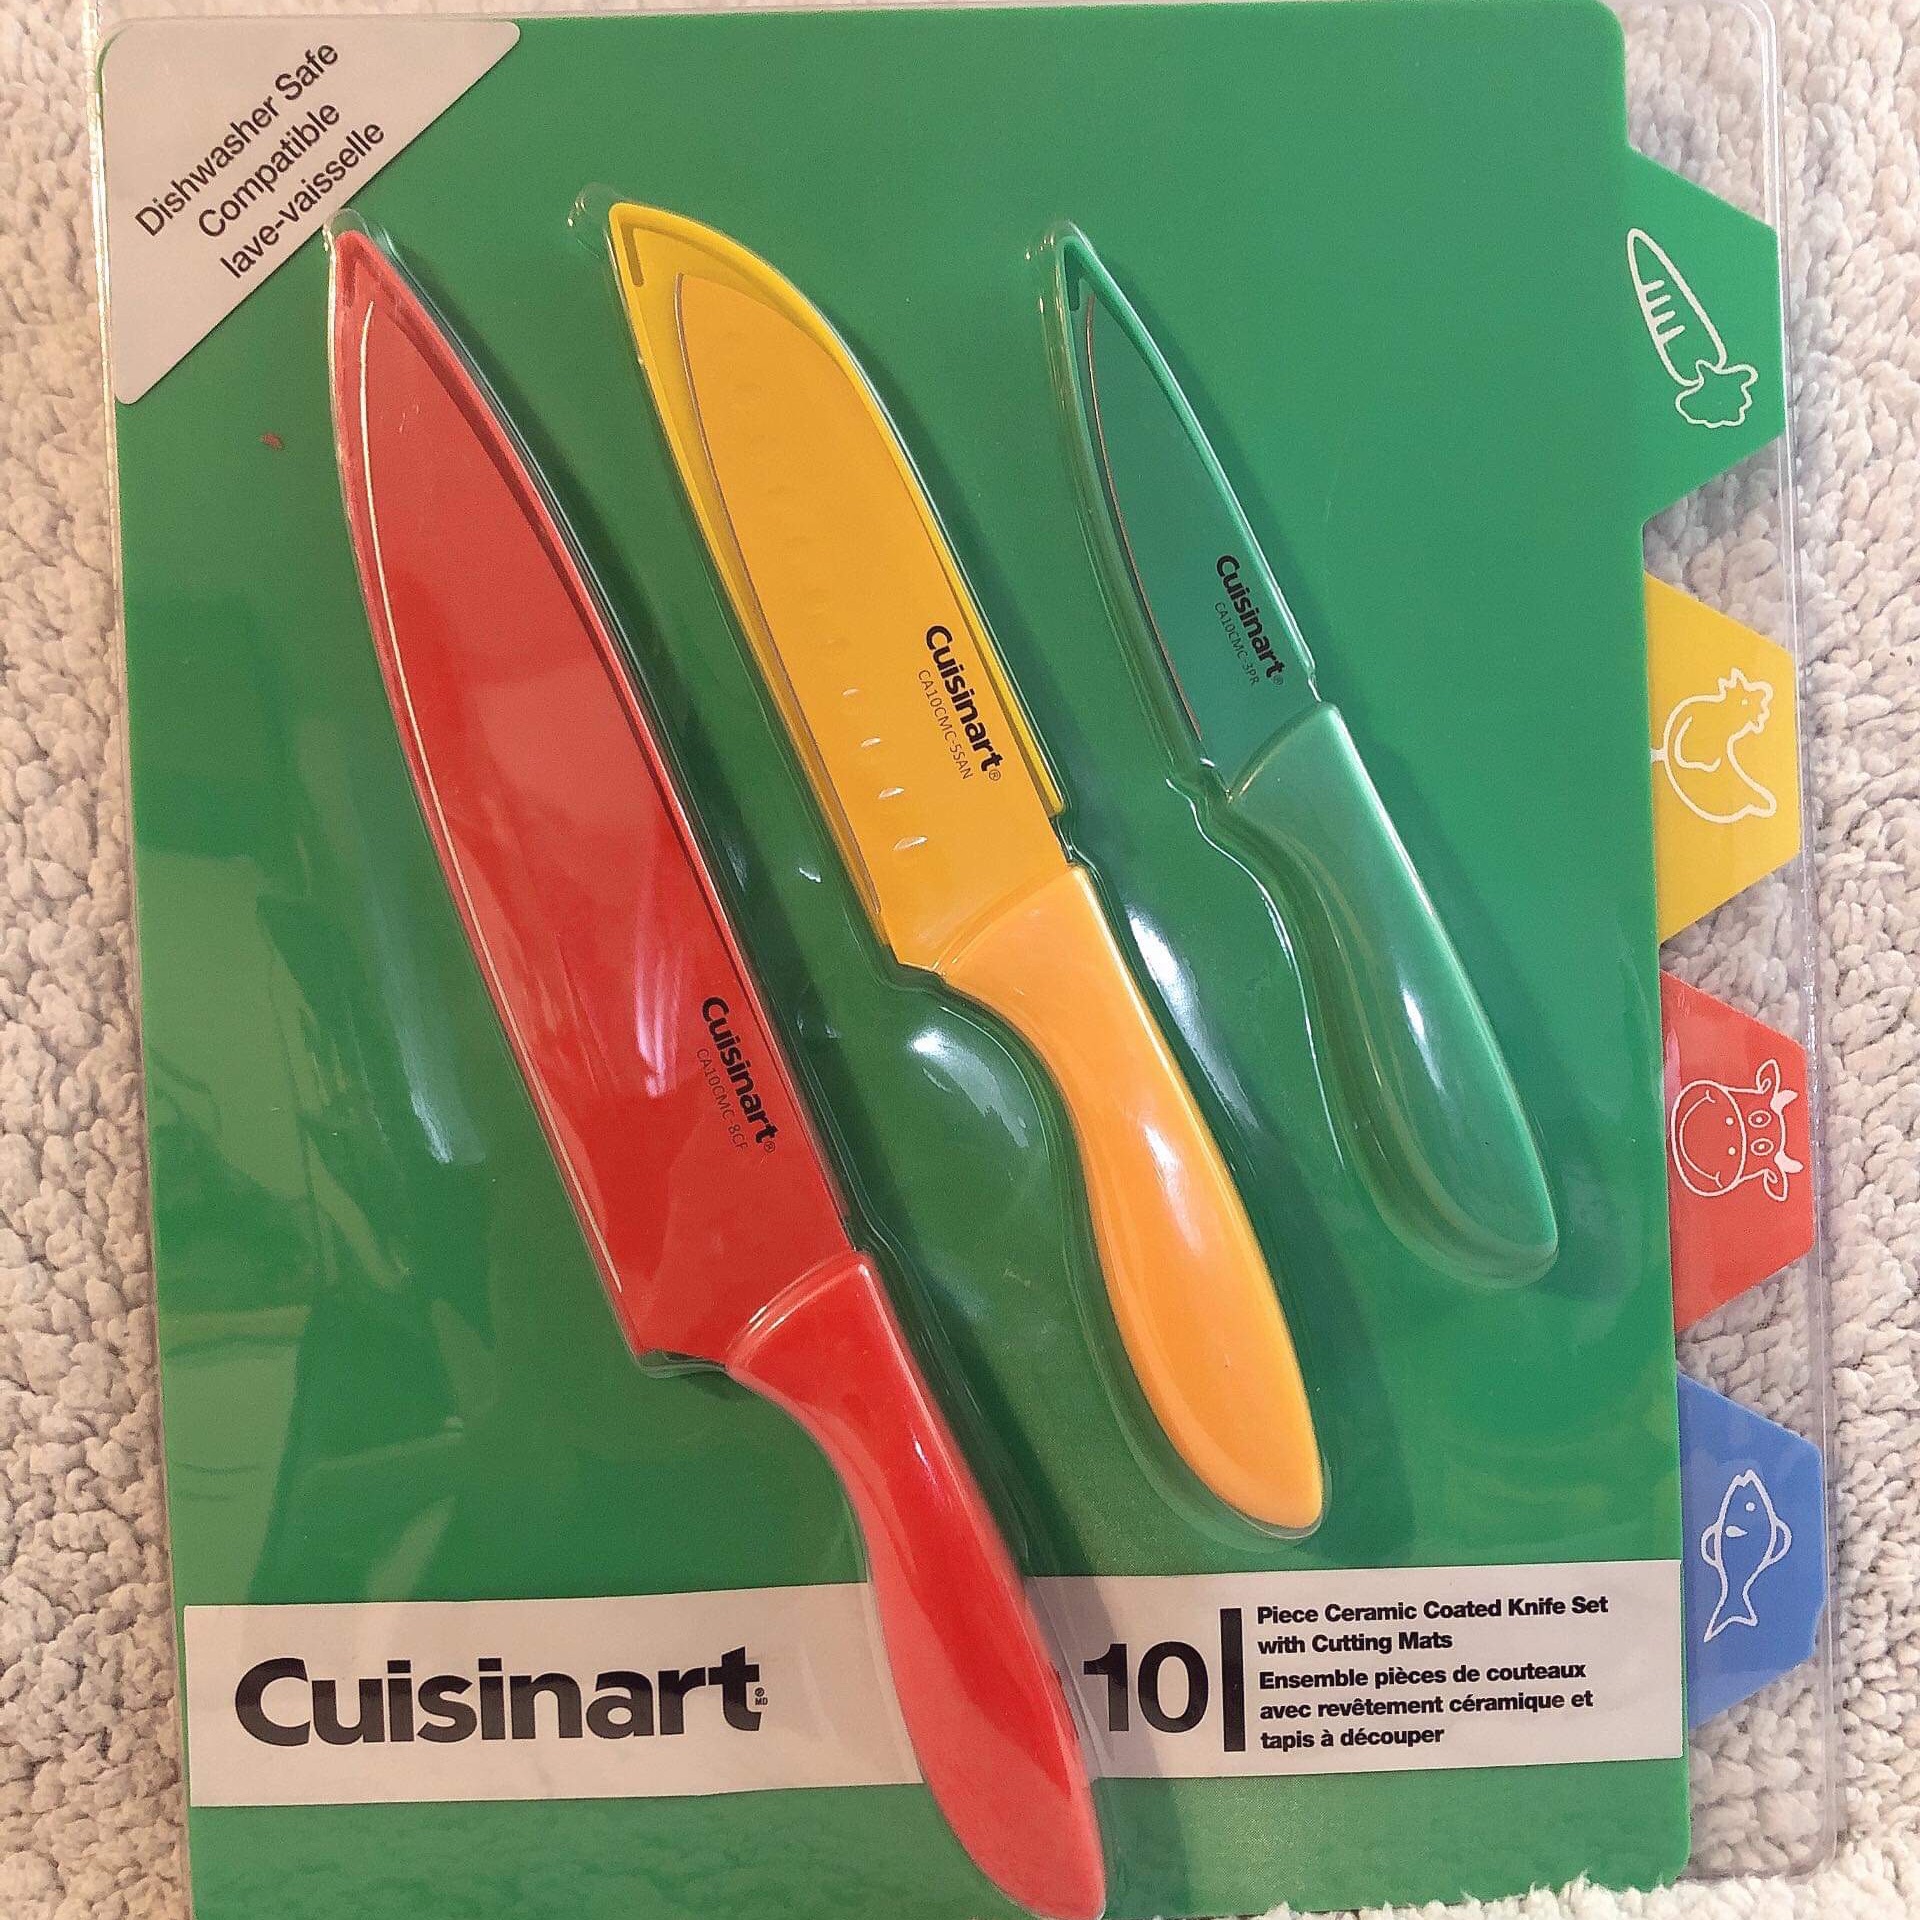 Cuisinart 12pc Ceramic Coated Knife Set - Best Image Home